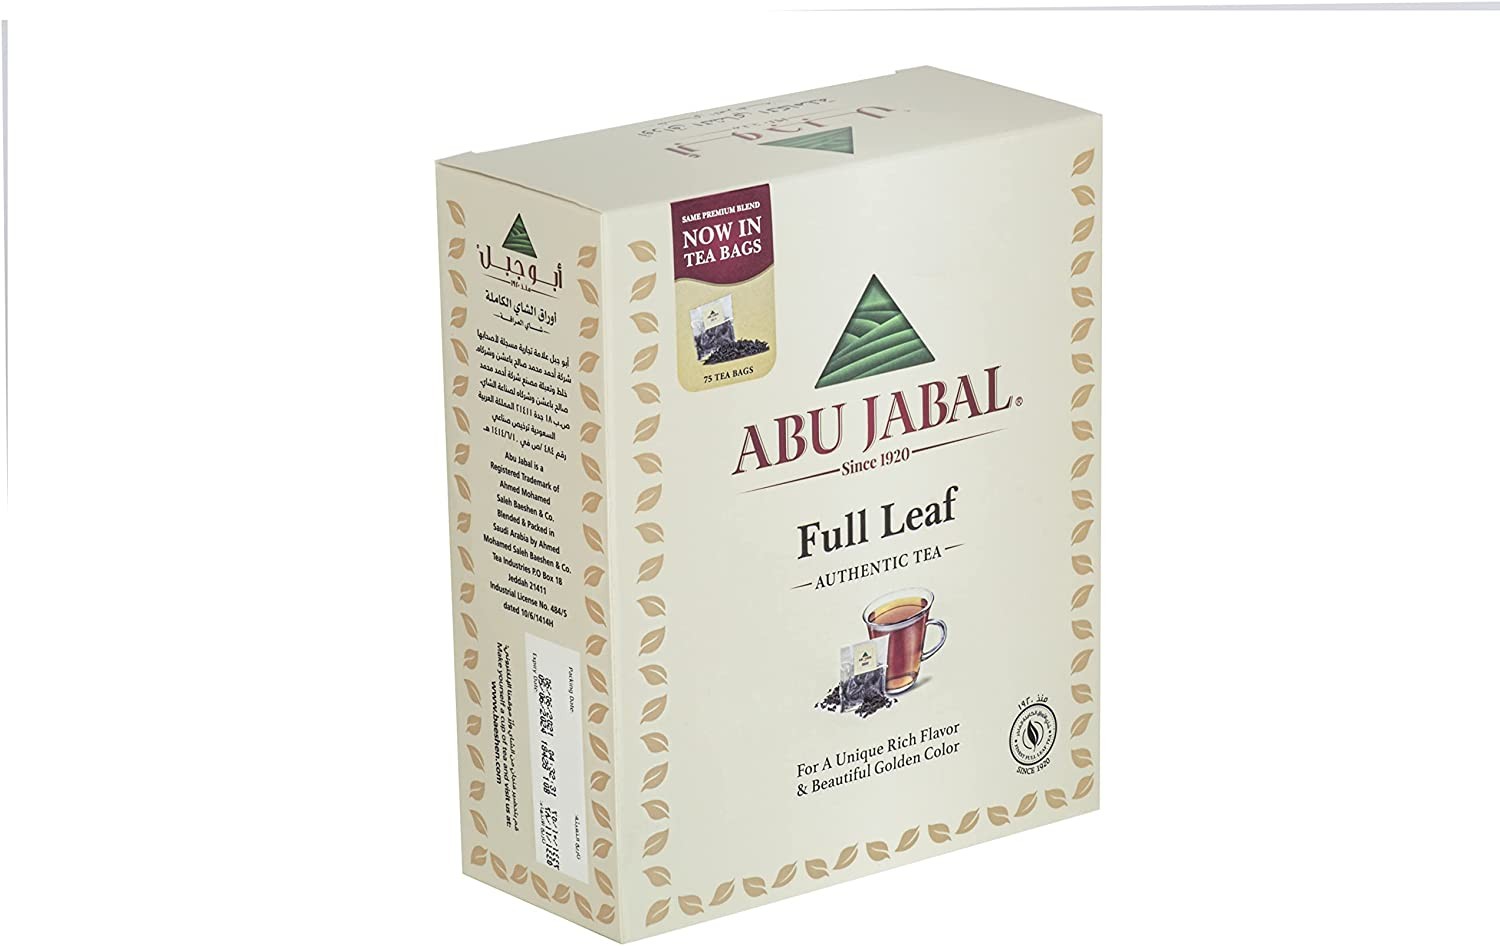 ABU JABAL AUTHENTIC TEA - 75 Tea Bags